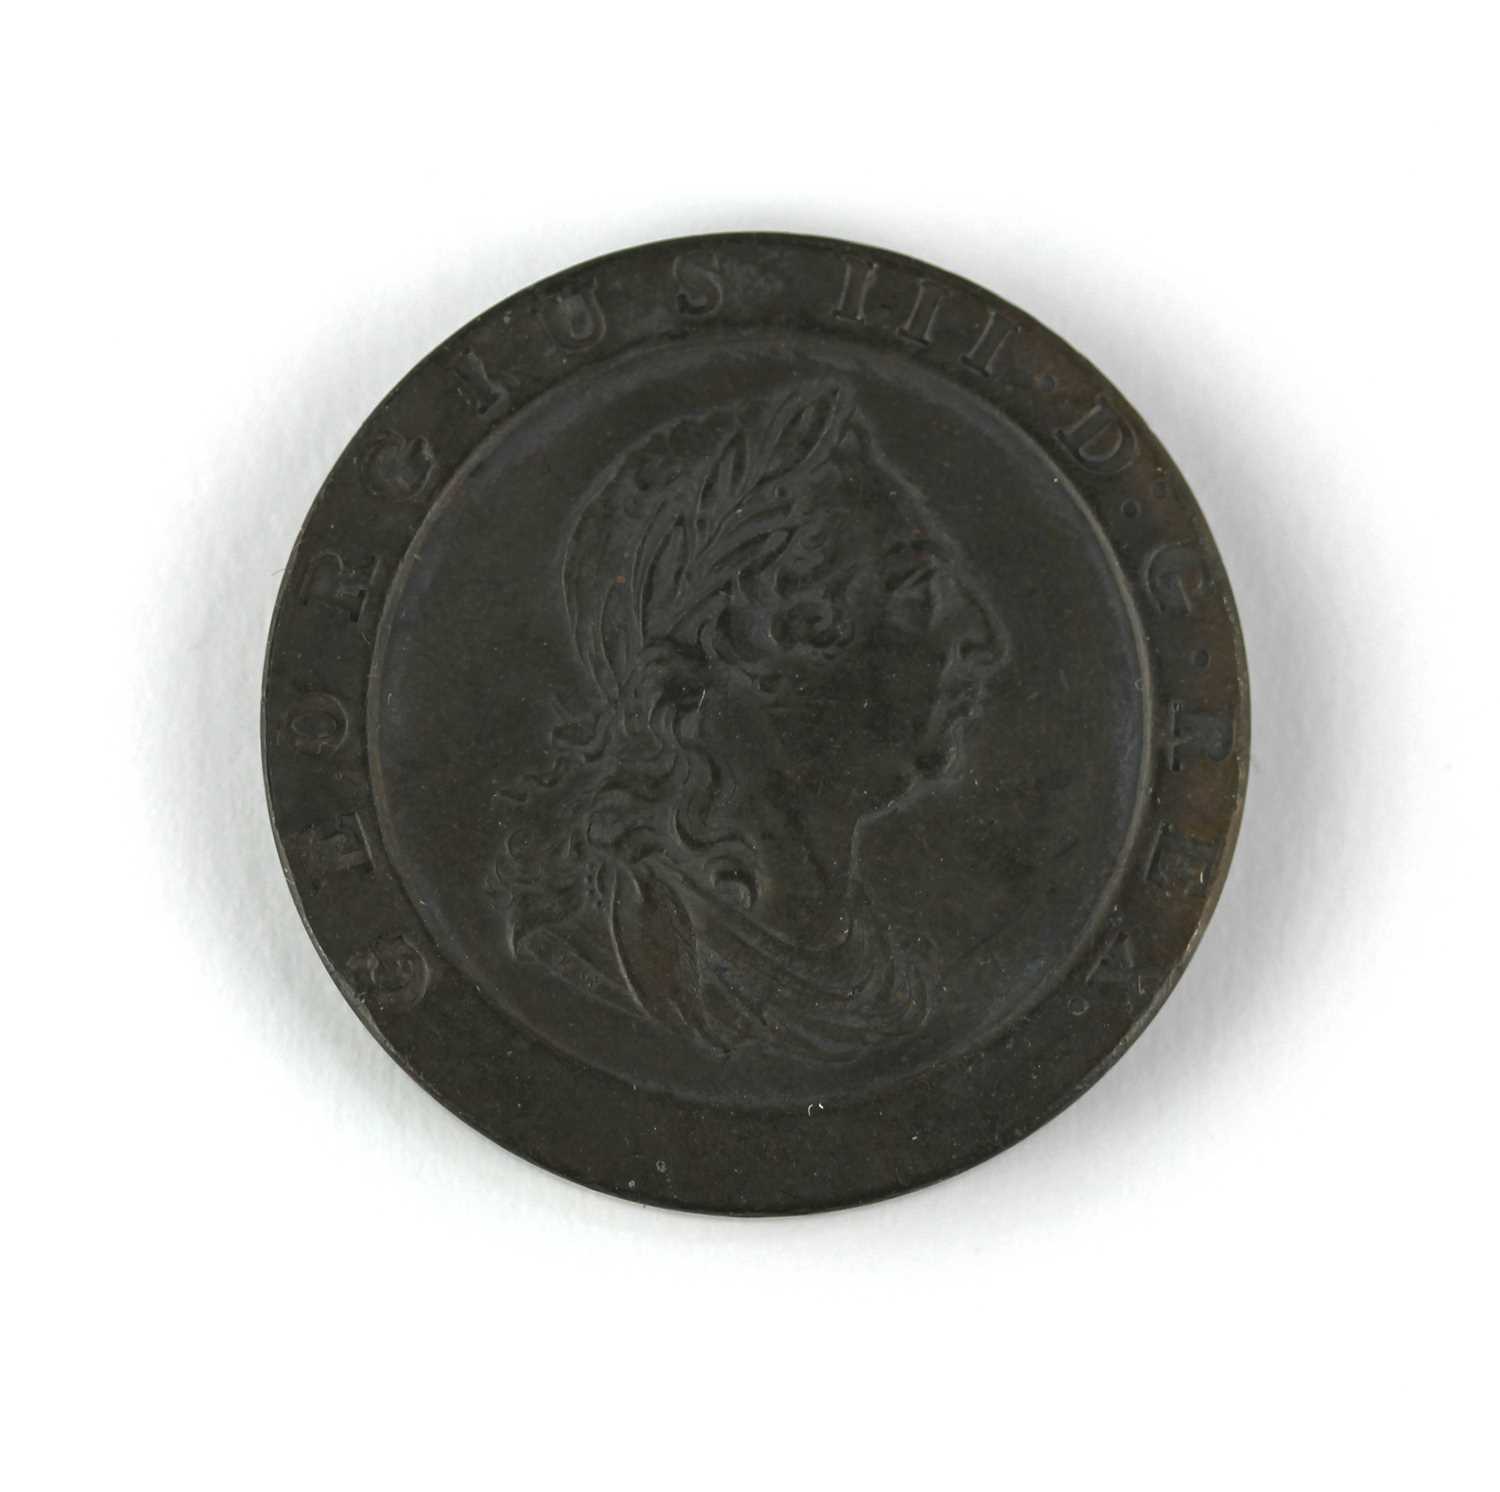 A George III cartwheel tuppence 1797